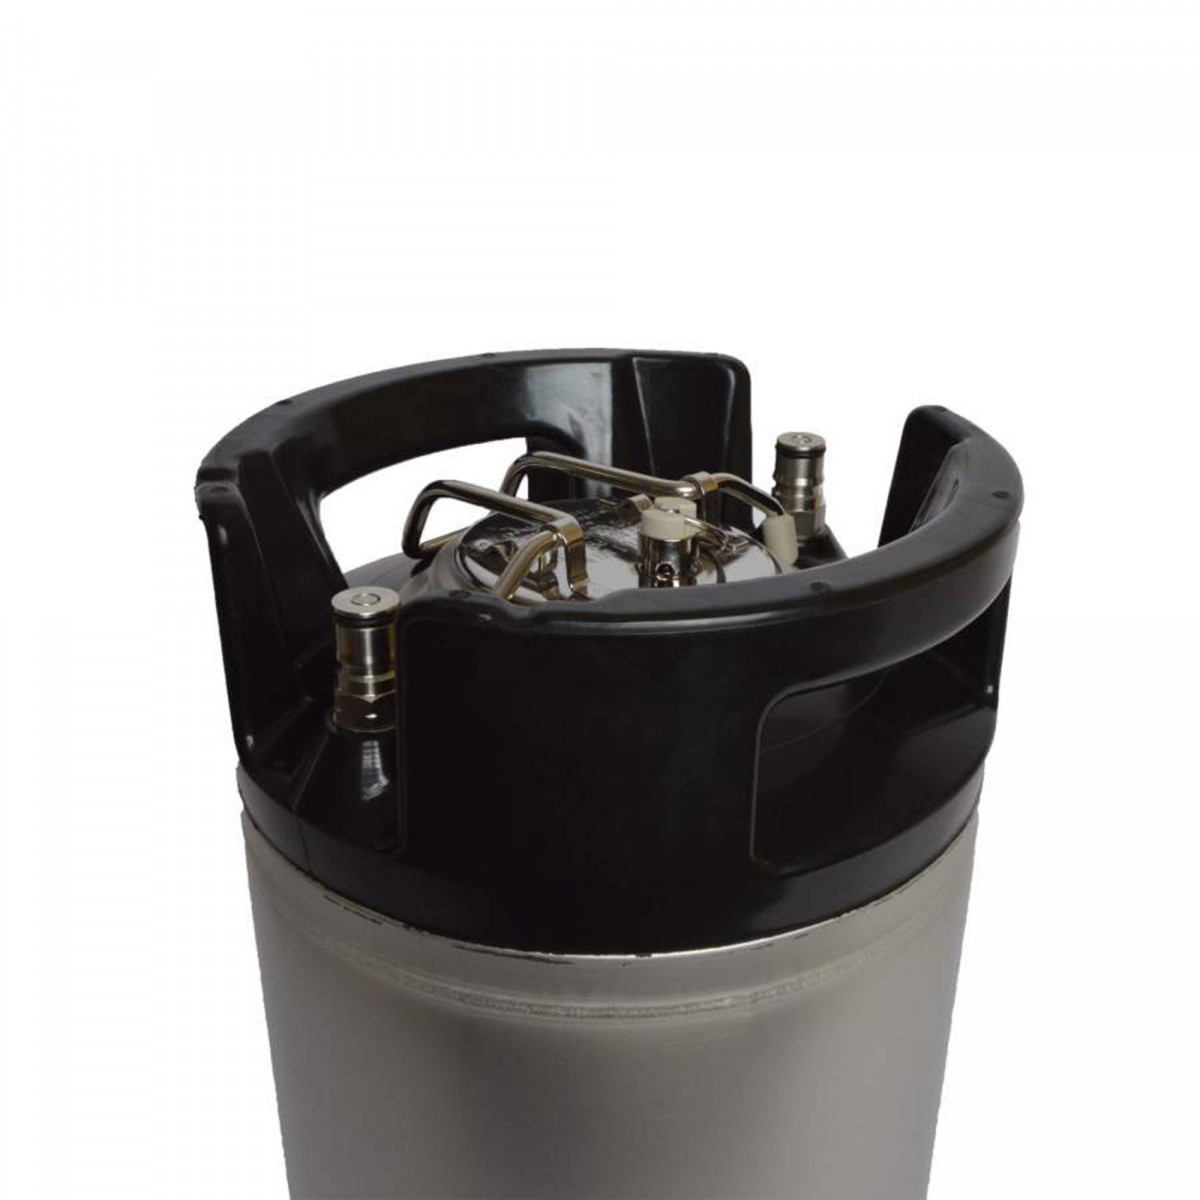 Complete pressure keg set with soda keg